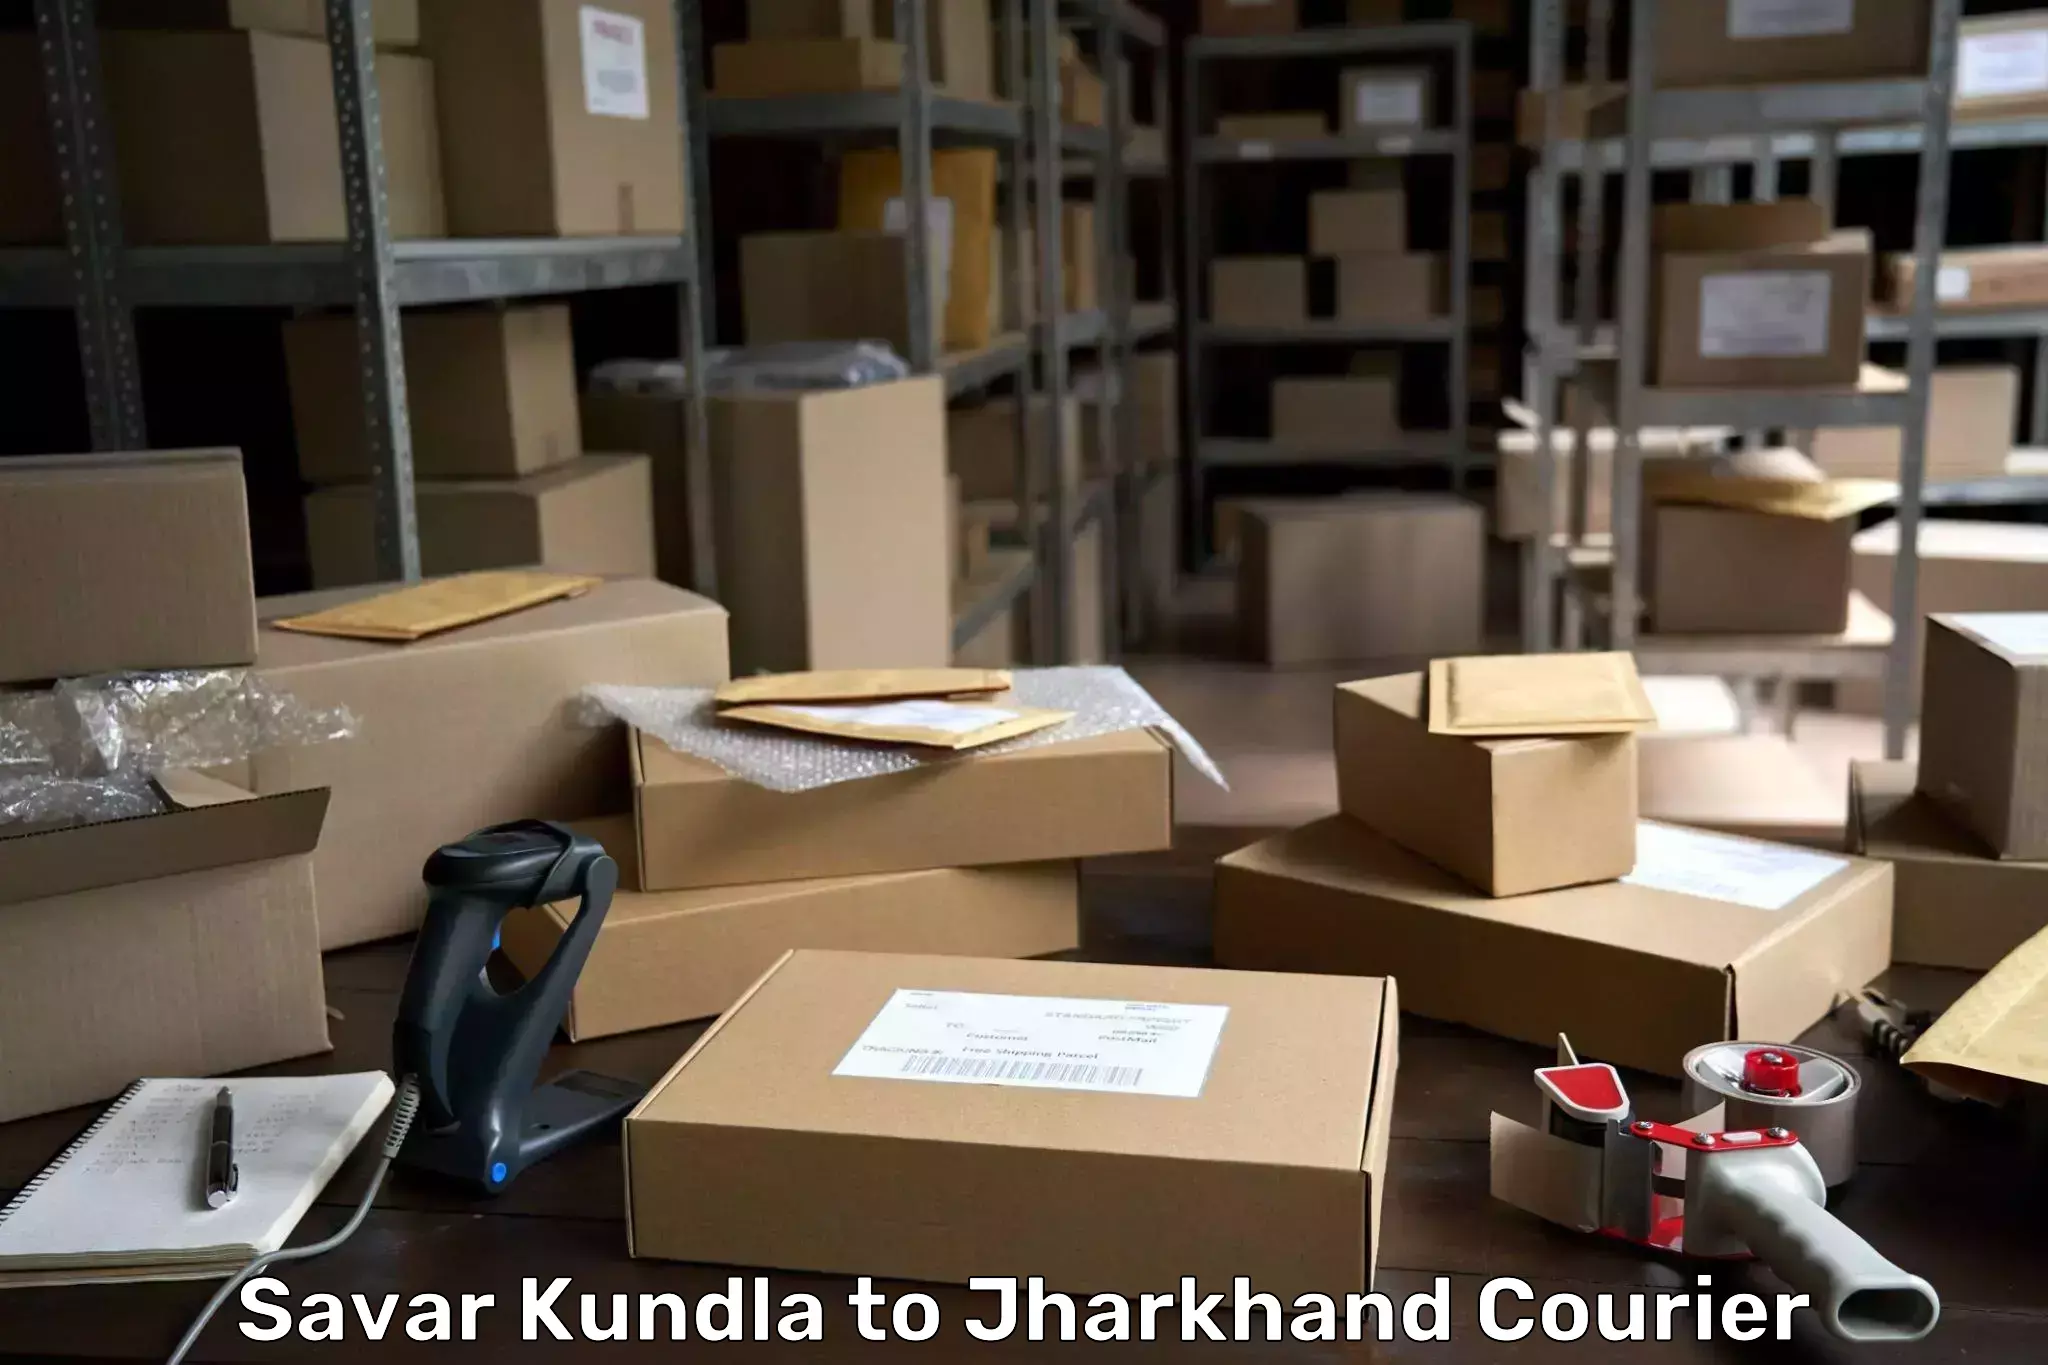 Budget-friendly shipping Savar Kundla to Ranchi